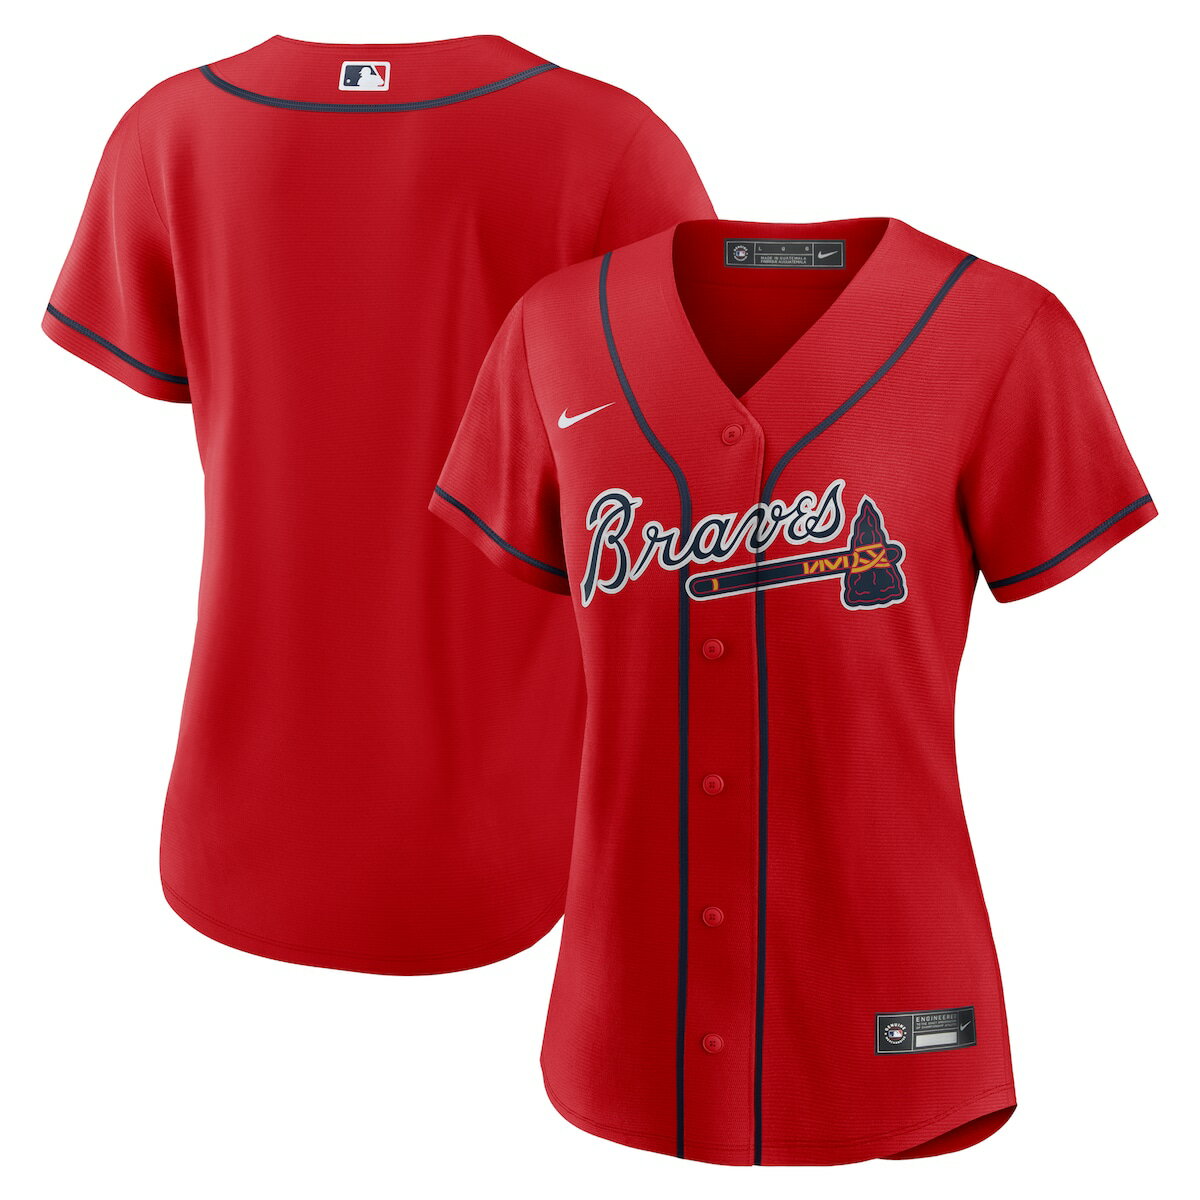 MLB ブレーブス レプリカ ユニフォーム Nike ナイキ レディース レッド (Women's Nike Official Replica Jersey)